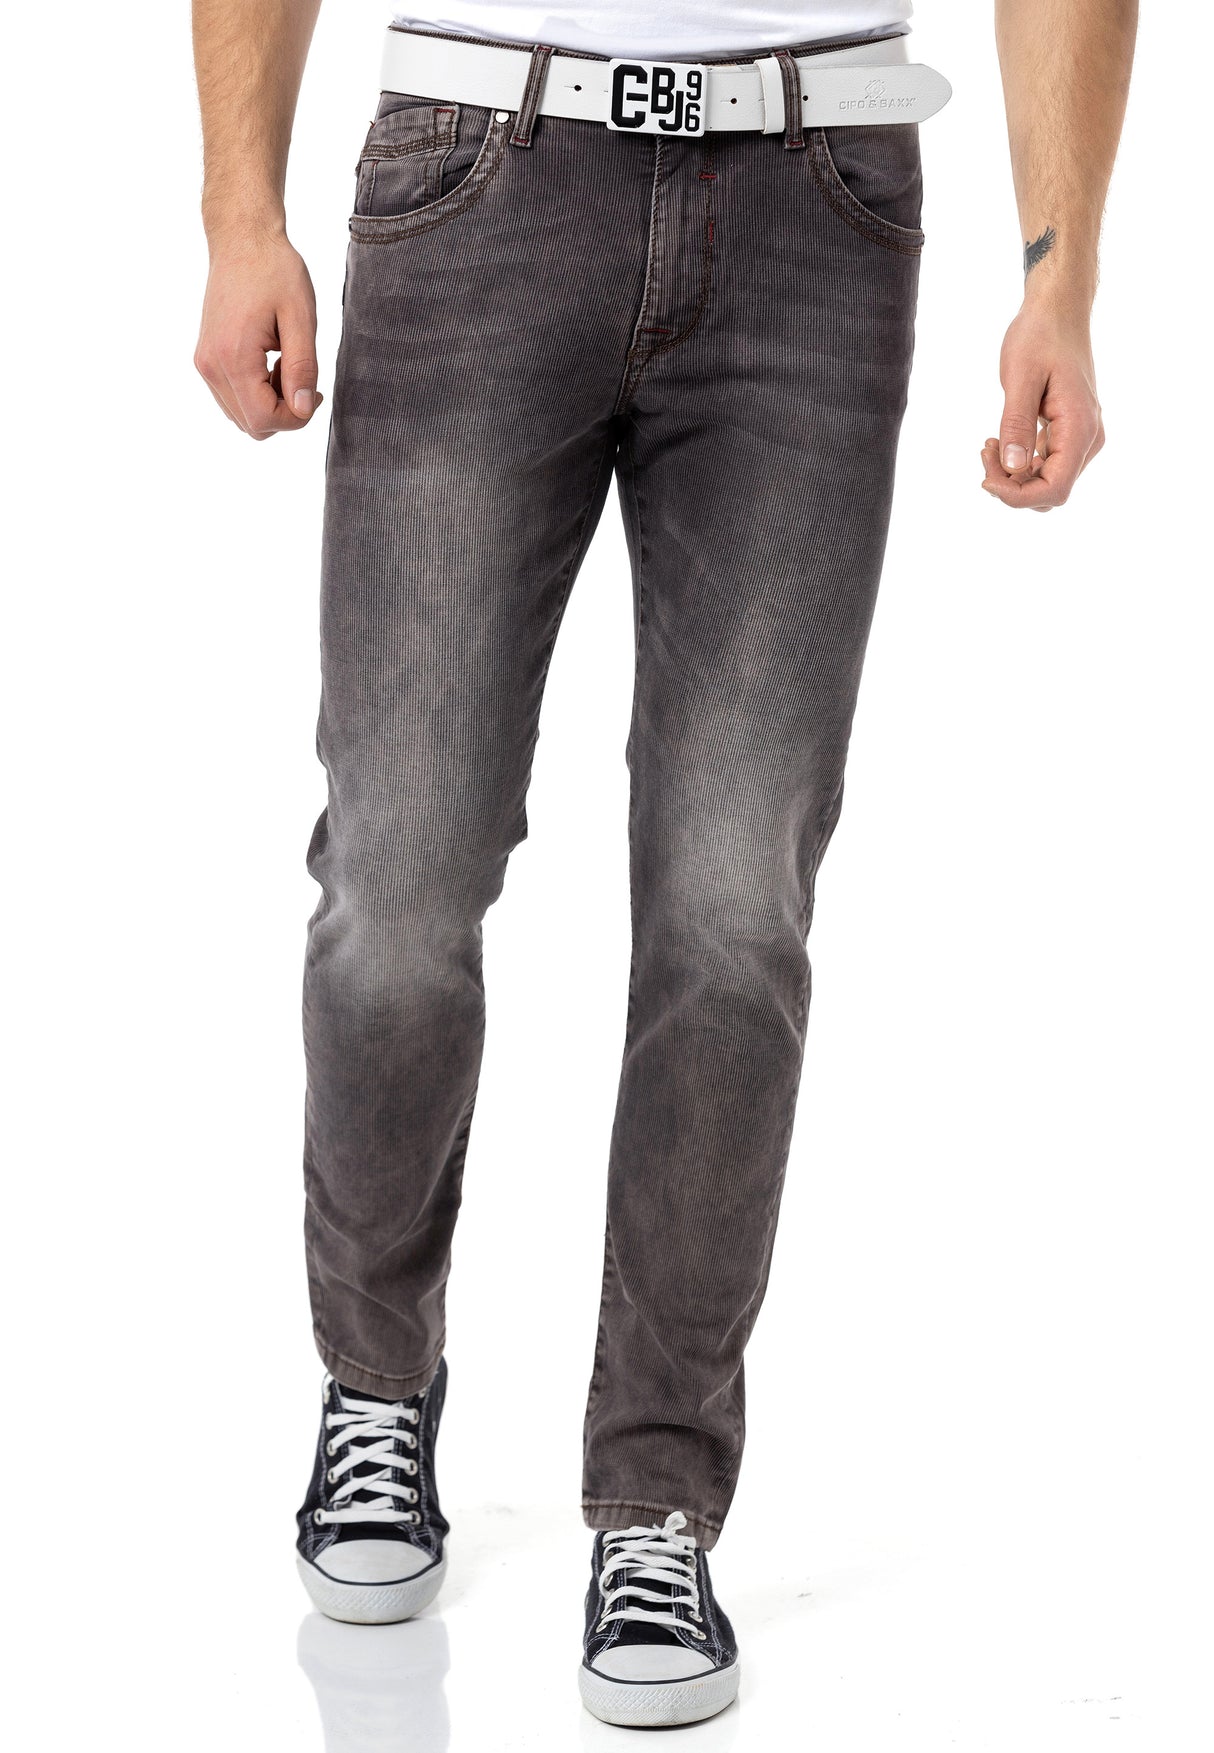 CD811 Herren Straight-Jeans mit trendigen Ziernähten